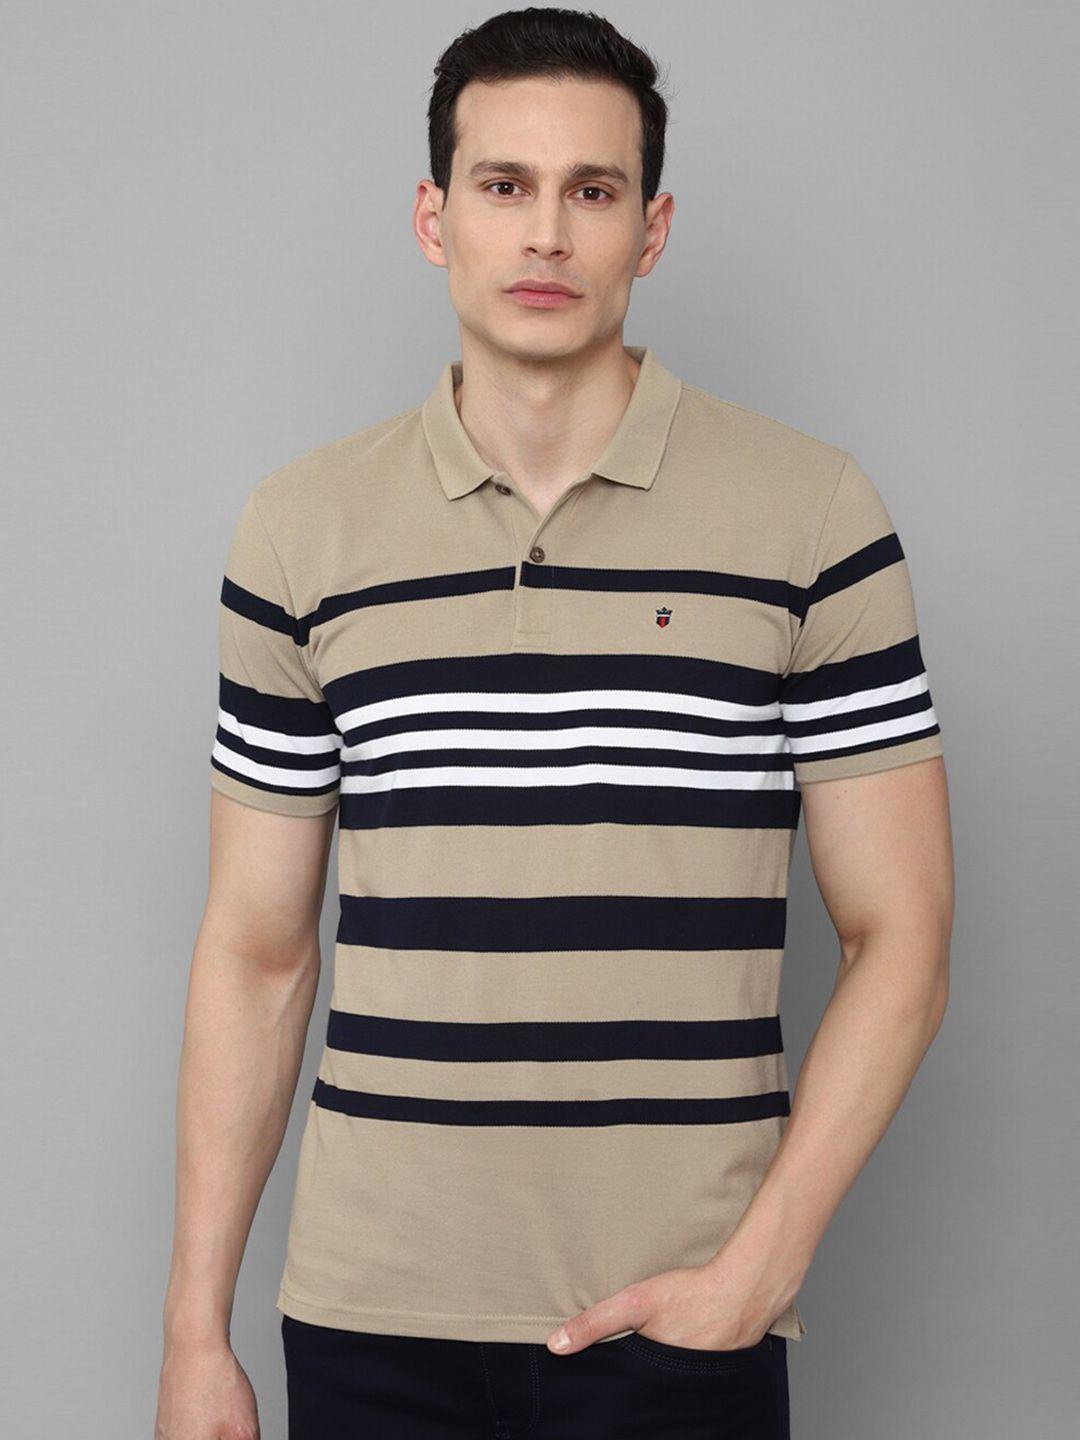 louis philippe sport men khaki & black striped polo collar slim fit cotton t-shirt